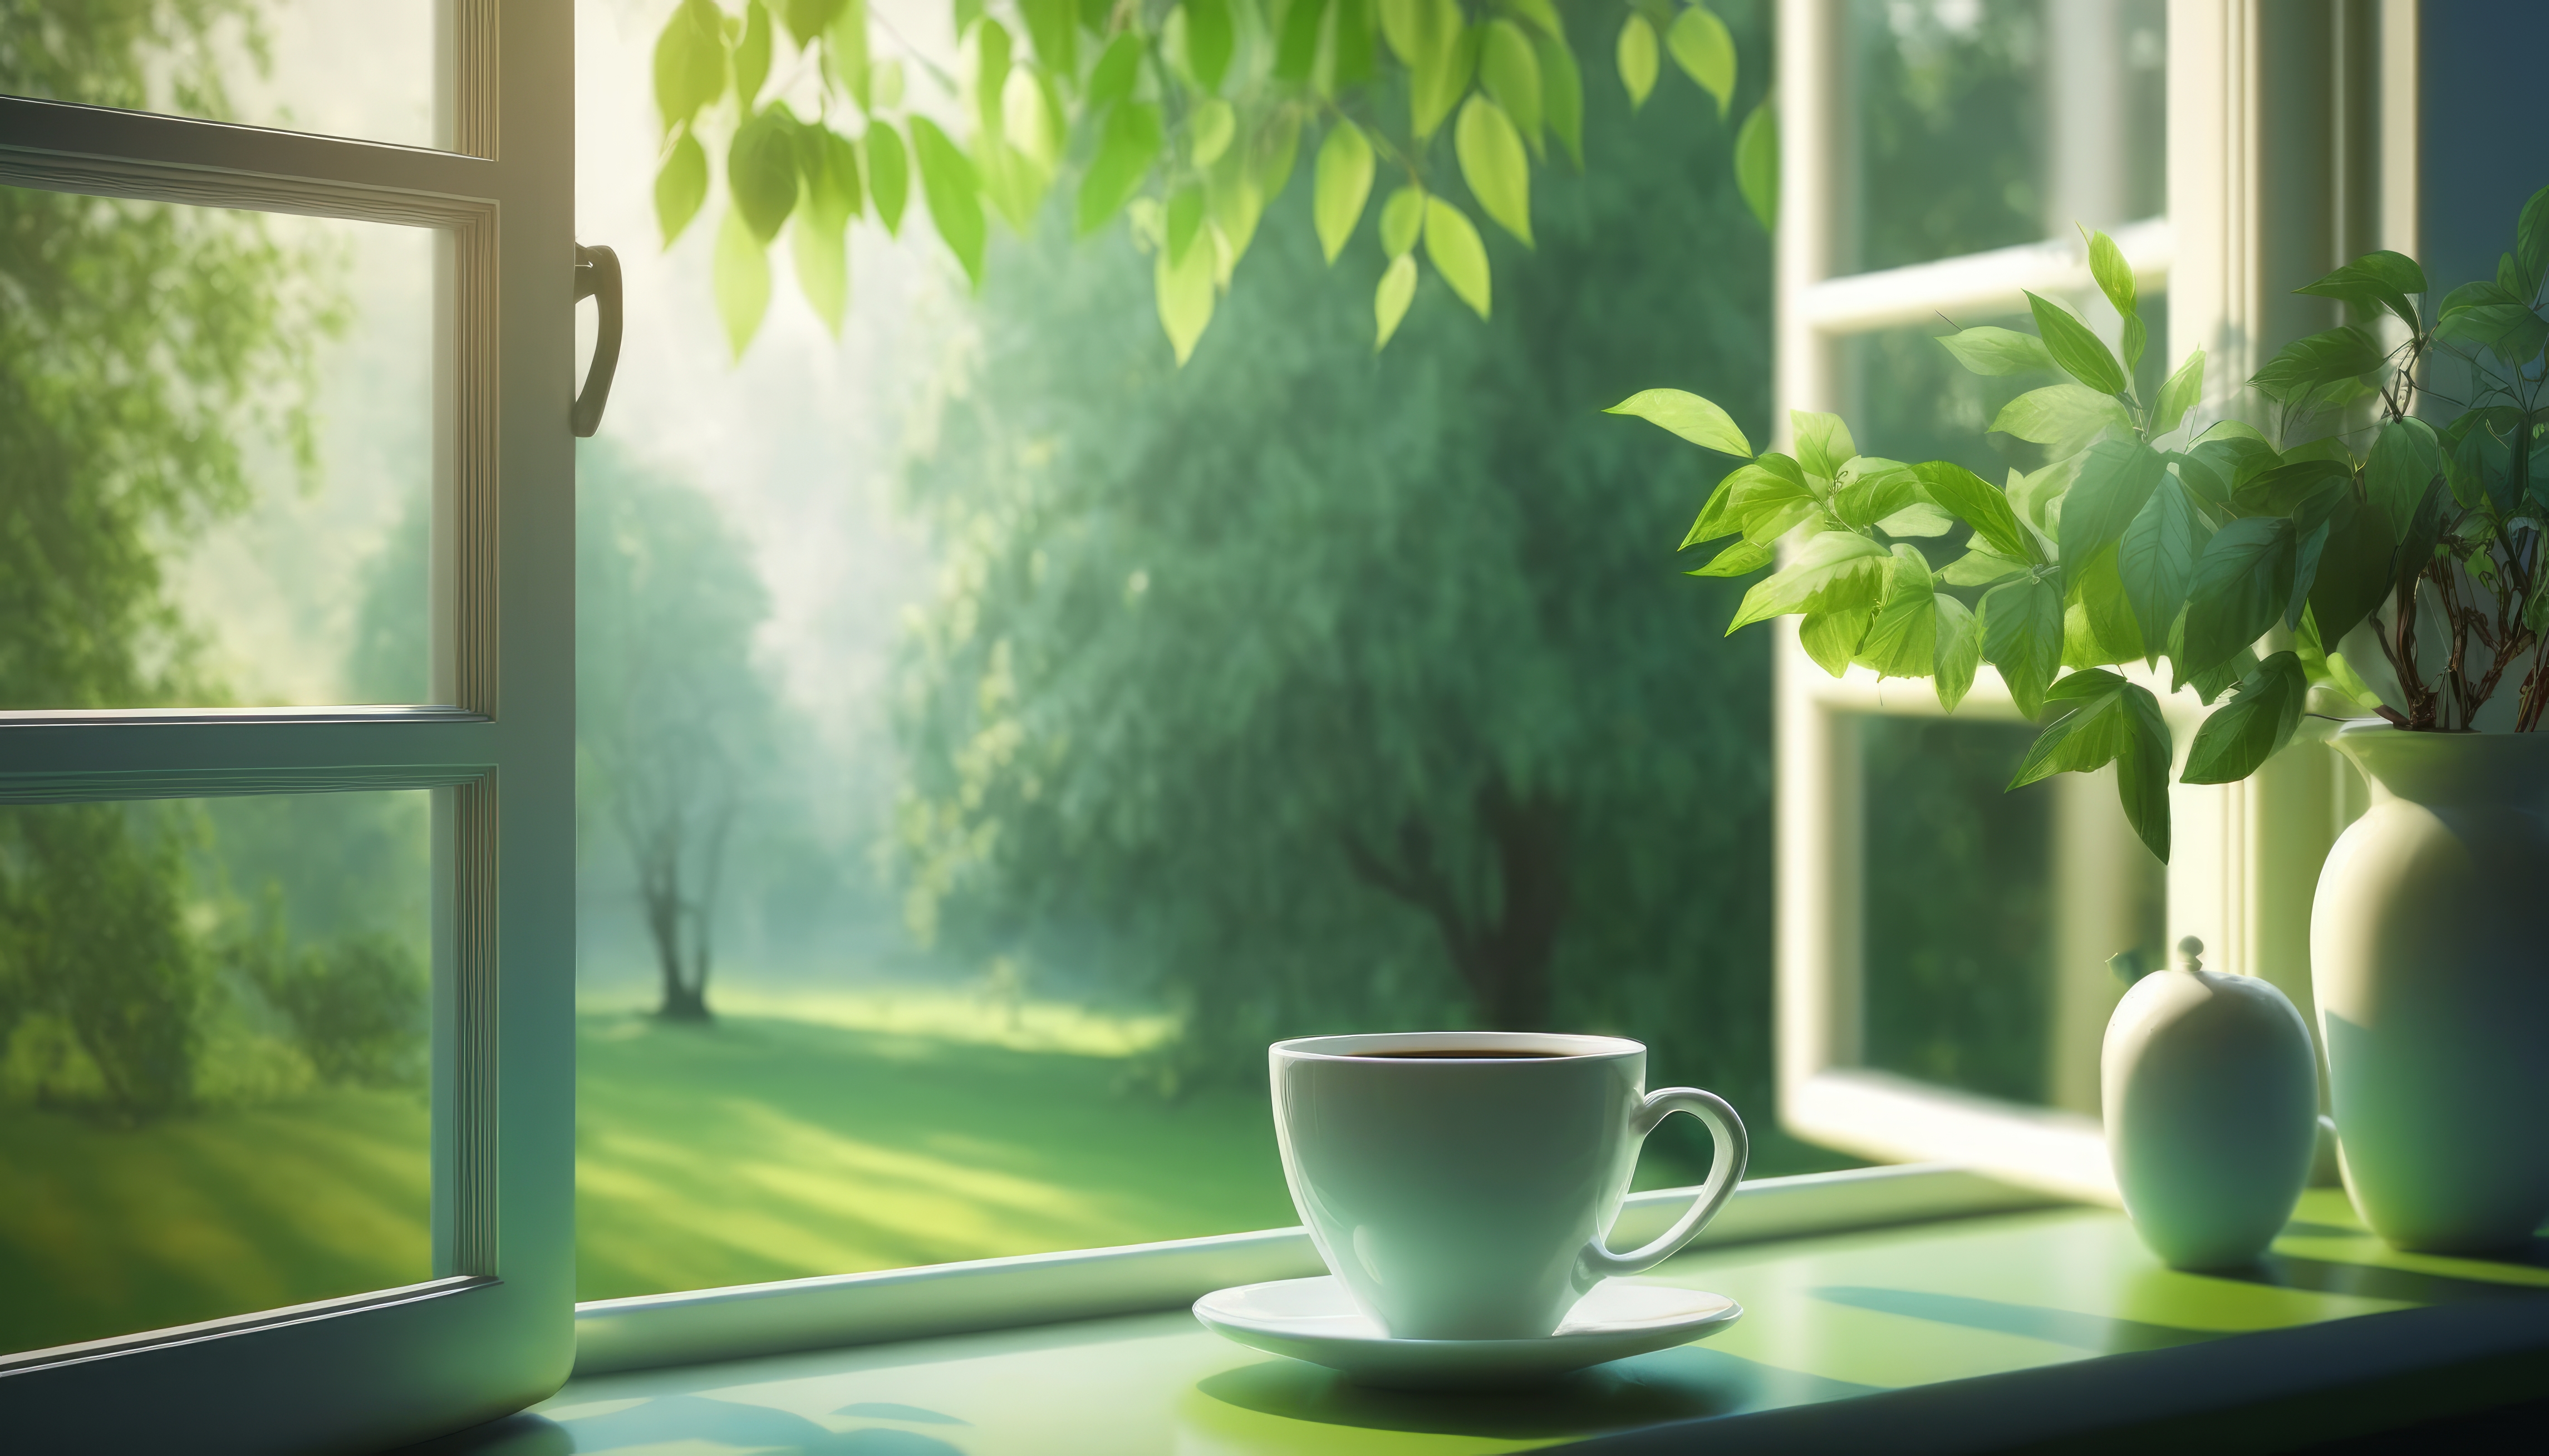 Ai Art Window Sill Tea Leaves Green Illustration Nature Plants Drink Window 4579x2616